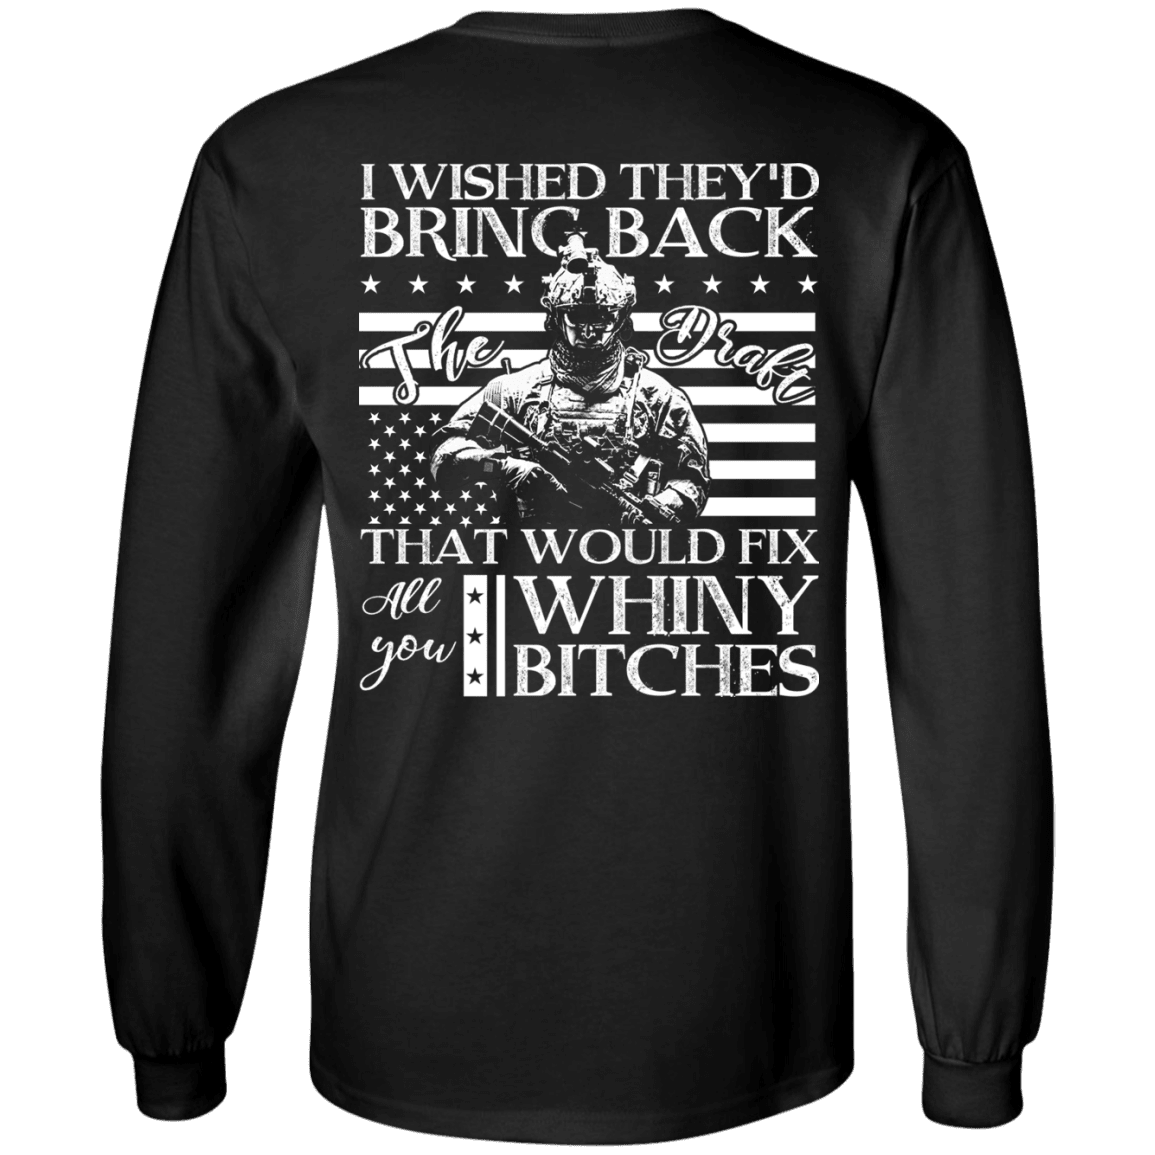 Military T-Shirt "I Wished They'd Bring Back Veteran Back"-TShirt-General-Veterans Nation